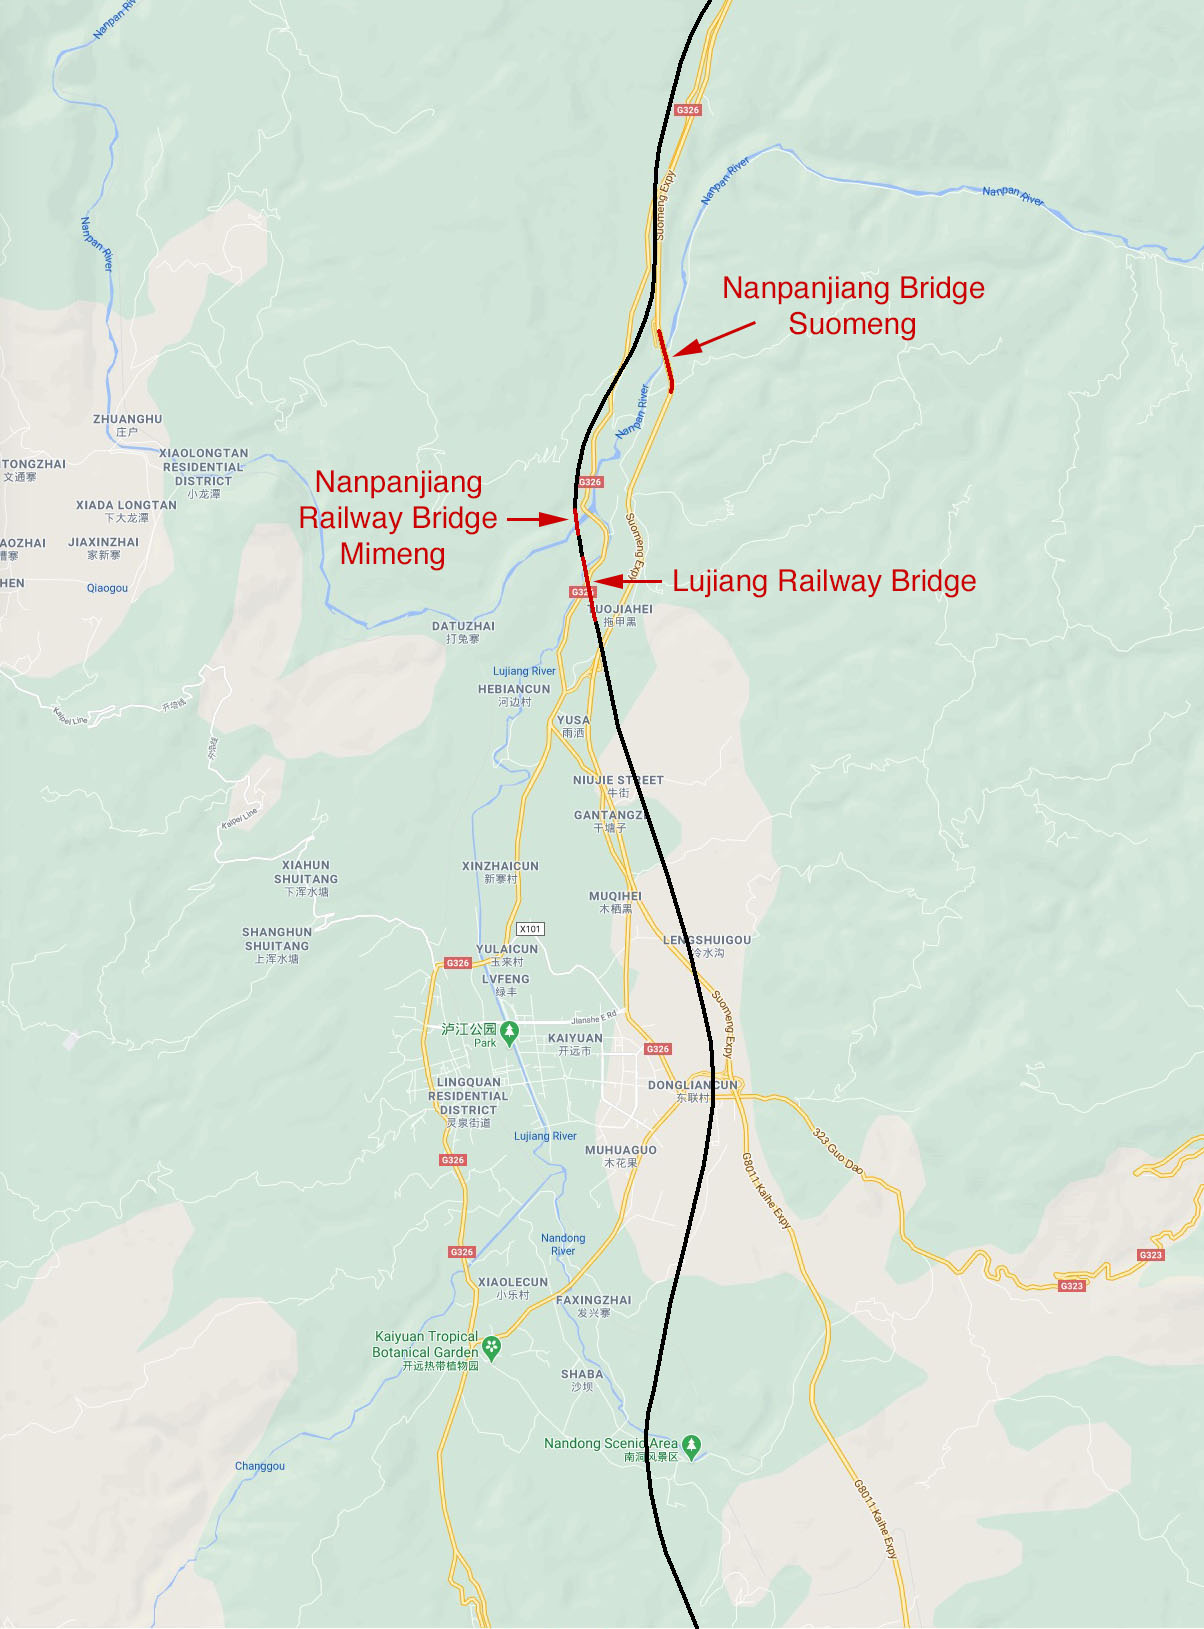 File:Nanpanjiang Railway Bridge MimengLocation.jpg